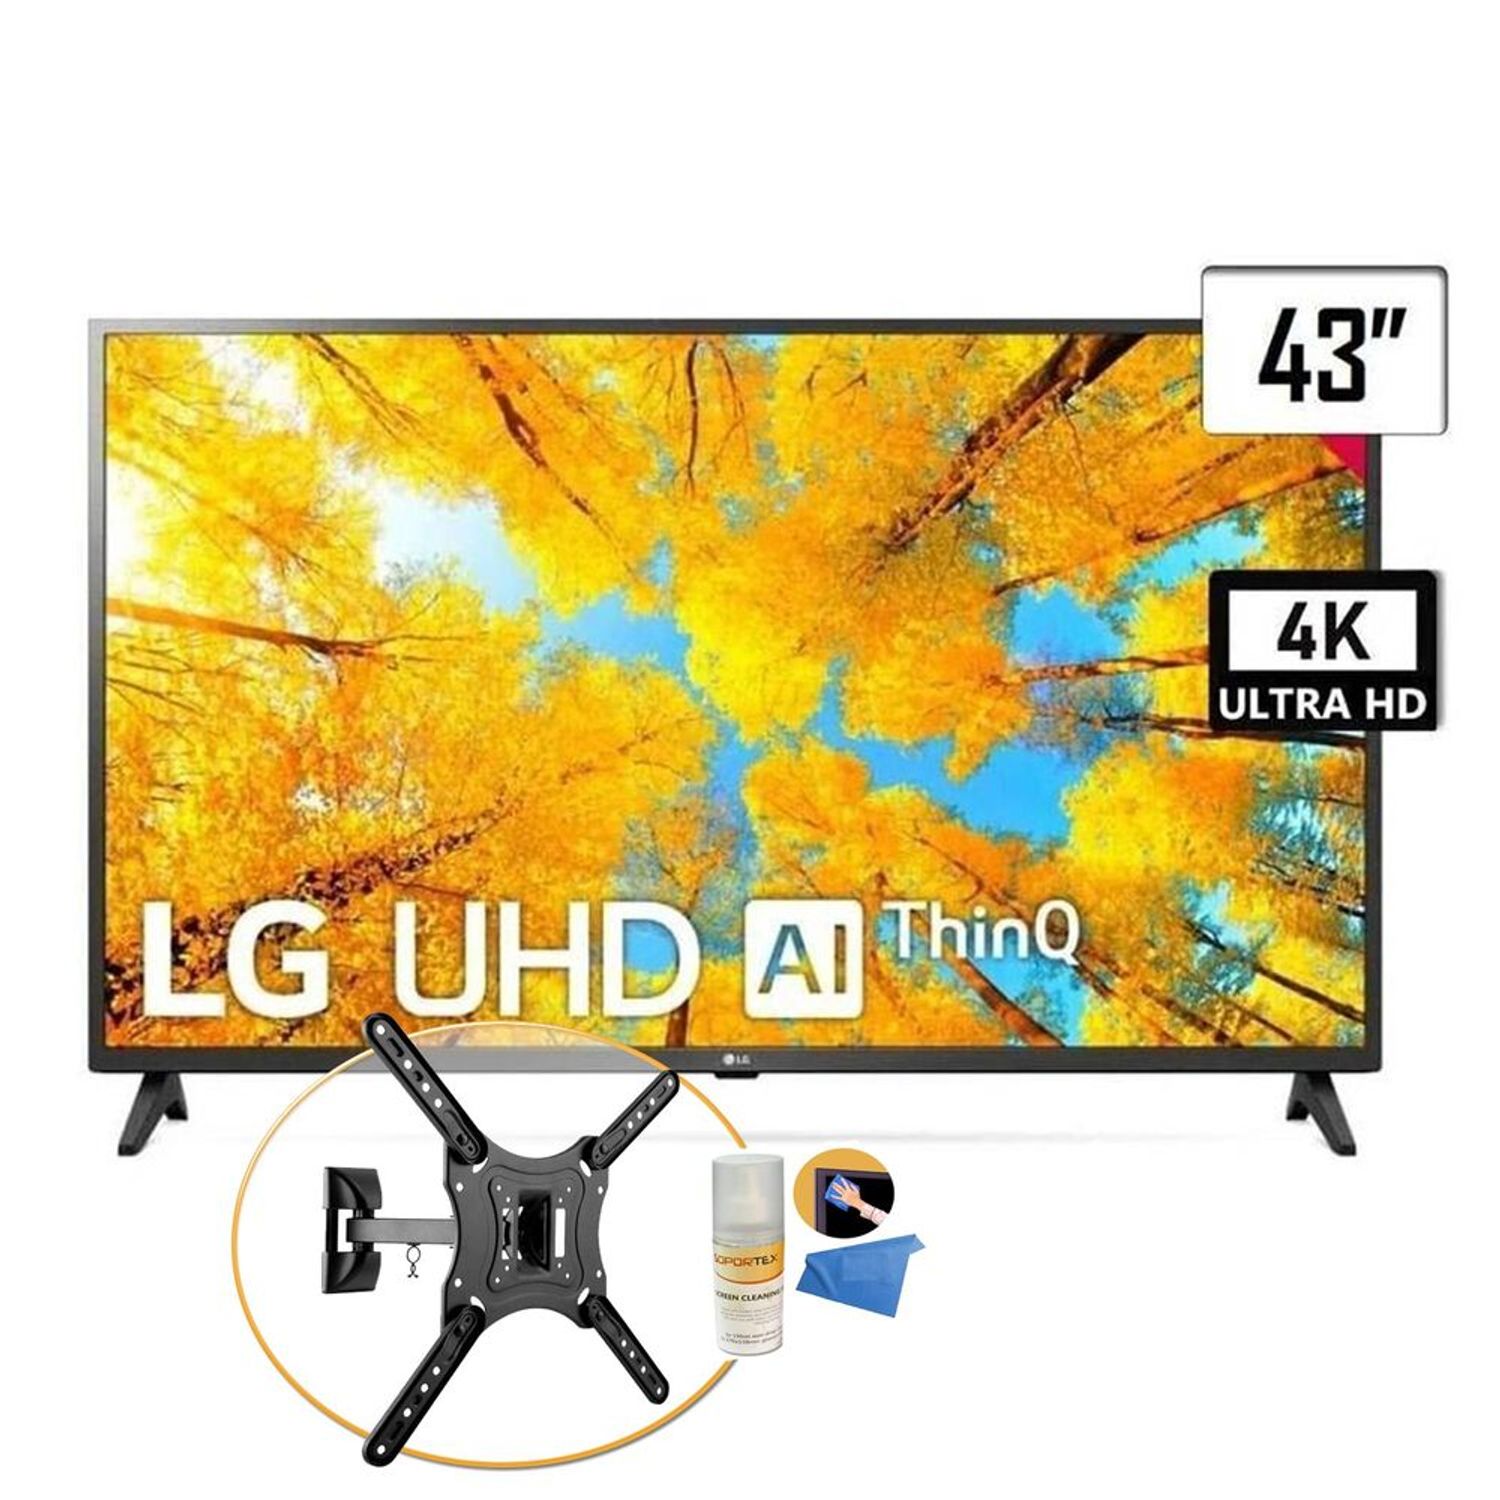 Comprar TV/Monitor LG 61cm/24 Smart TV - Tienda LG